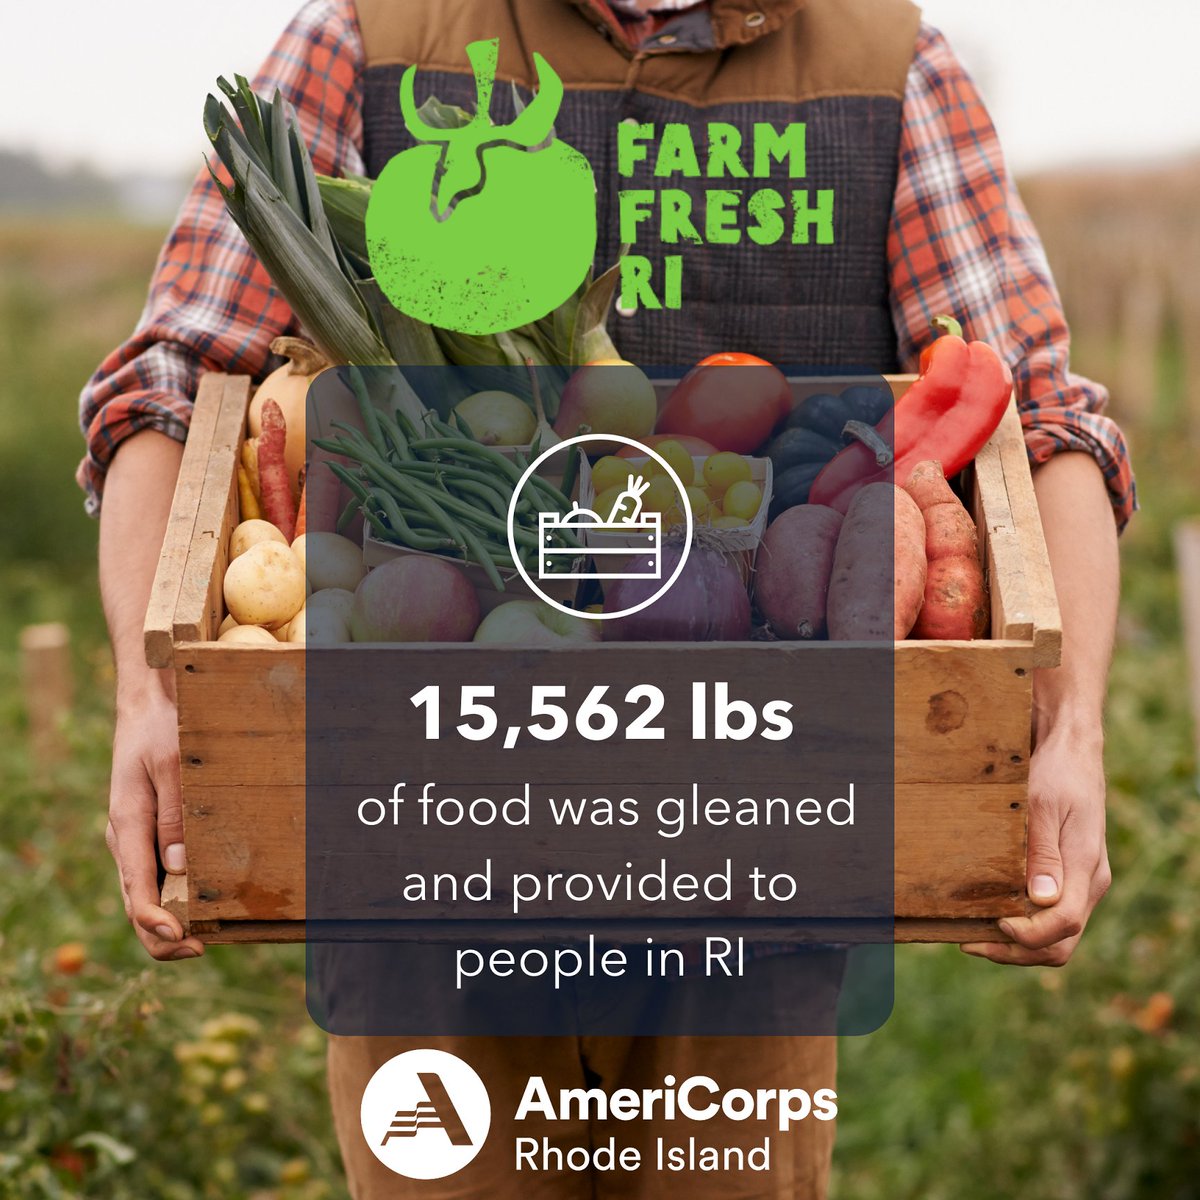 Become @FarmFreshRI's AmeriCorps Fellow helping with...
- #CommunityEducation
- Harvest Kitchen #YouthEducation
- #FoodRecovery
- #FoodAccess & Education
- #FoodRescue Summer AmeriCorps VISTA

#ChooseAmeriCorps #AmeriCorpsWorks #foodaccess #foodrescue #farming  @AmeriCorps